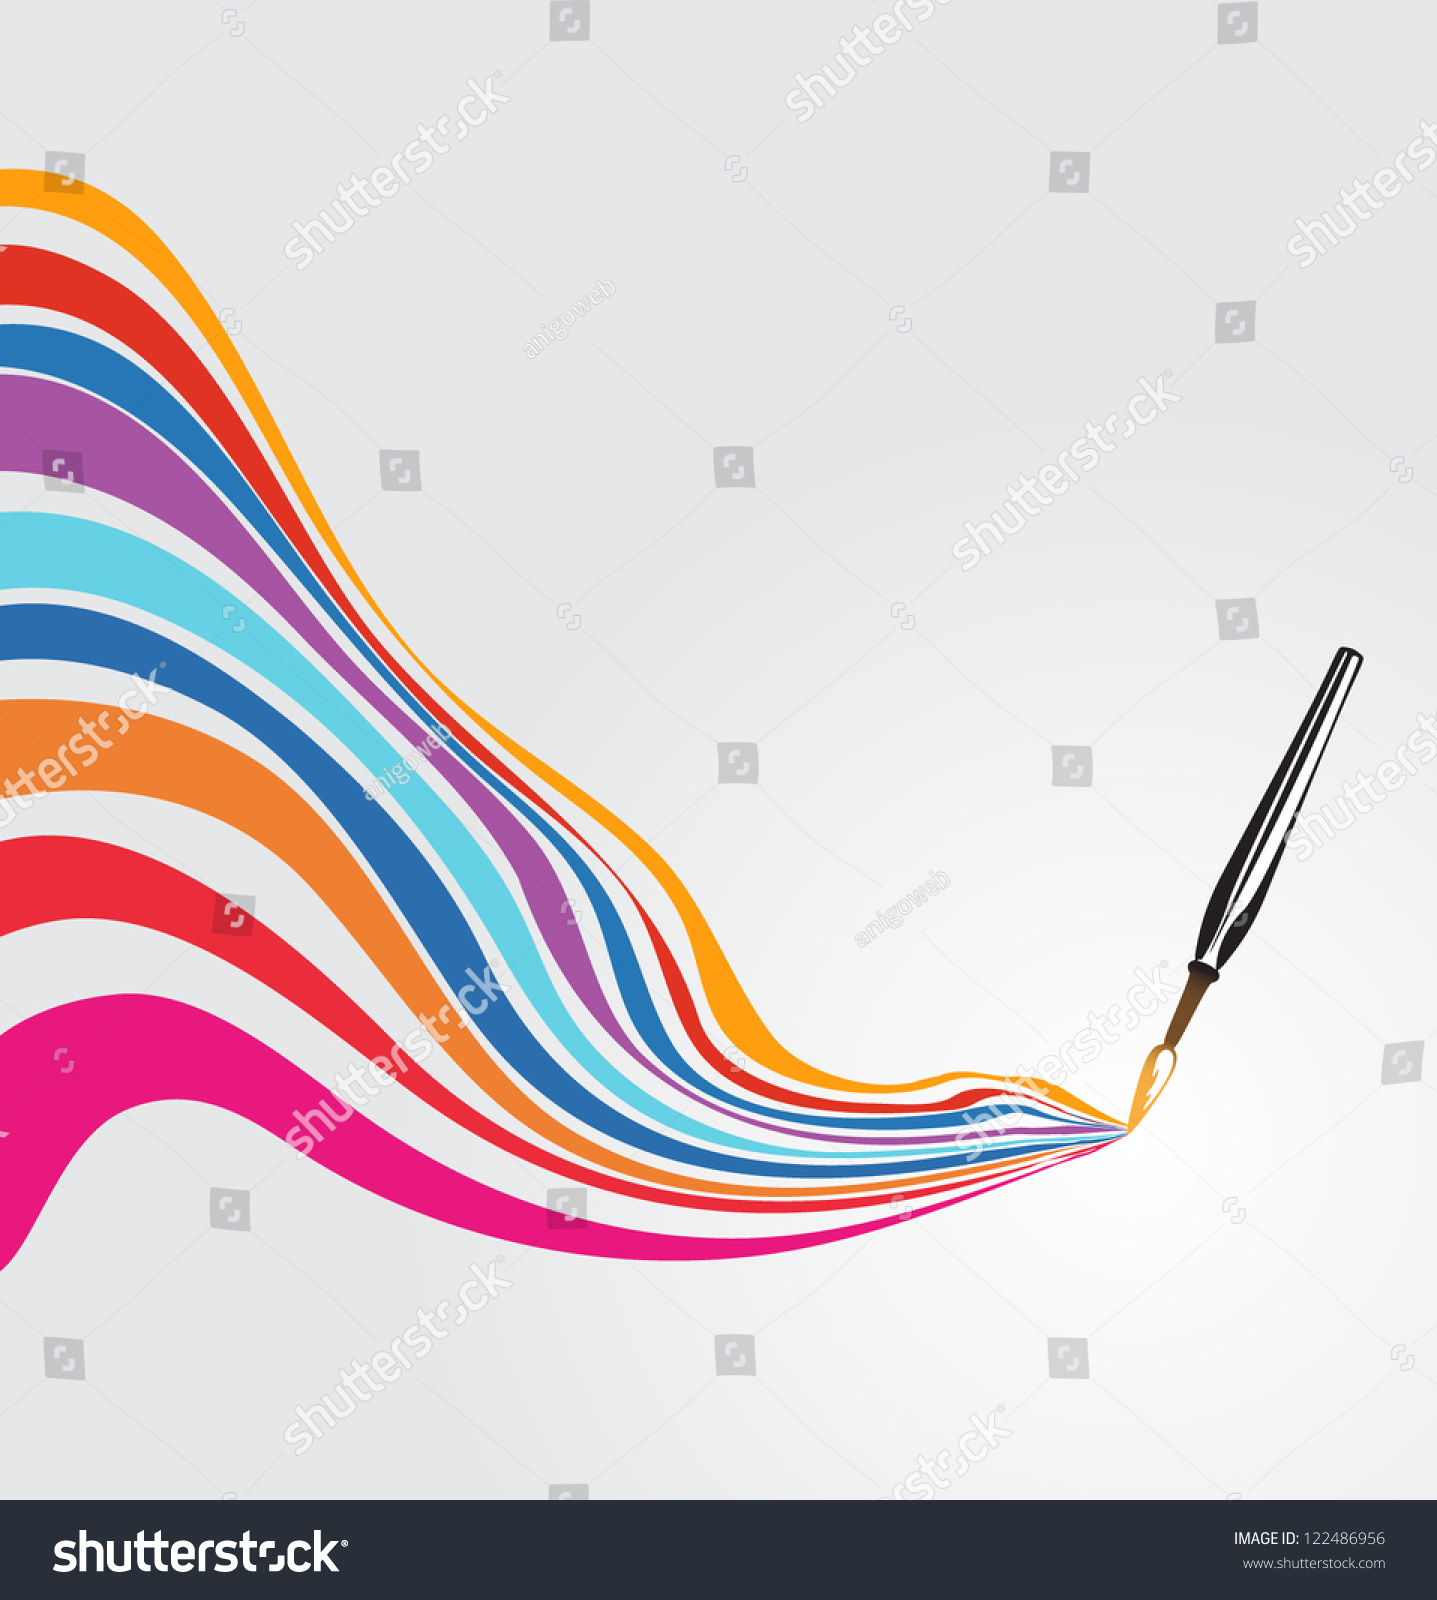 Paintbrush Drawing A Rainbow Stock Vector Illustration 122486956 ...